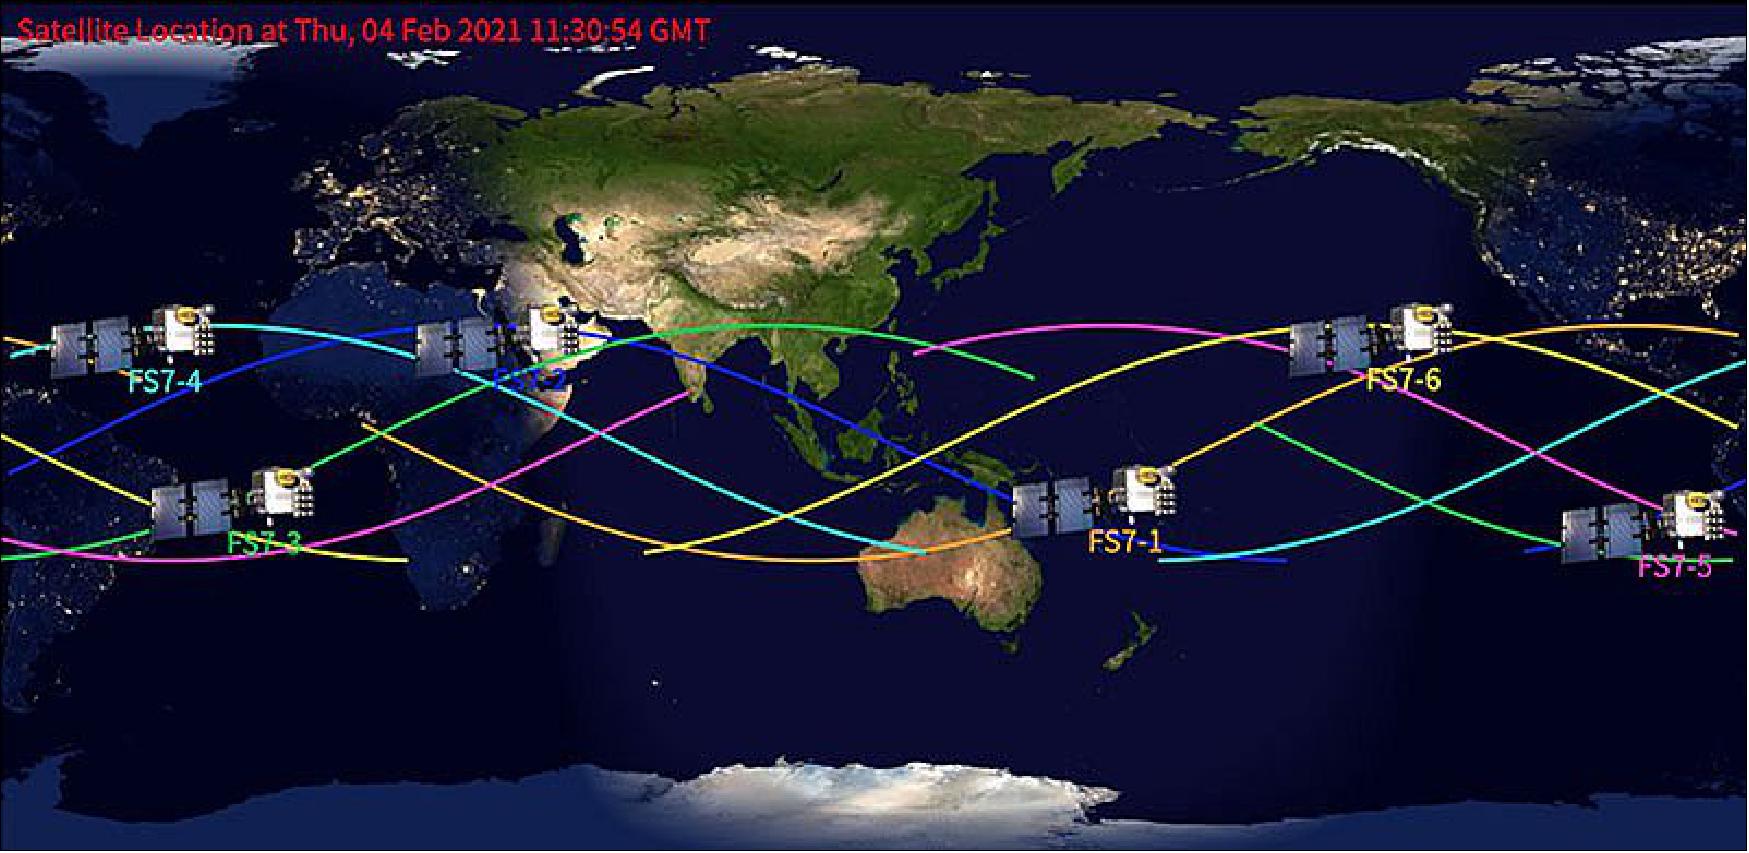 Figure 20: FORMOSAT-7 satellite orbit distribution map of 4 February 2021 (image credit: NSPO)